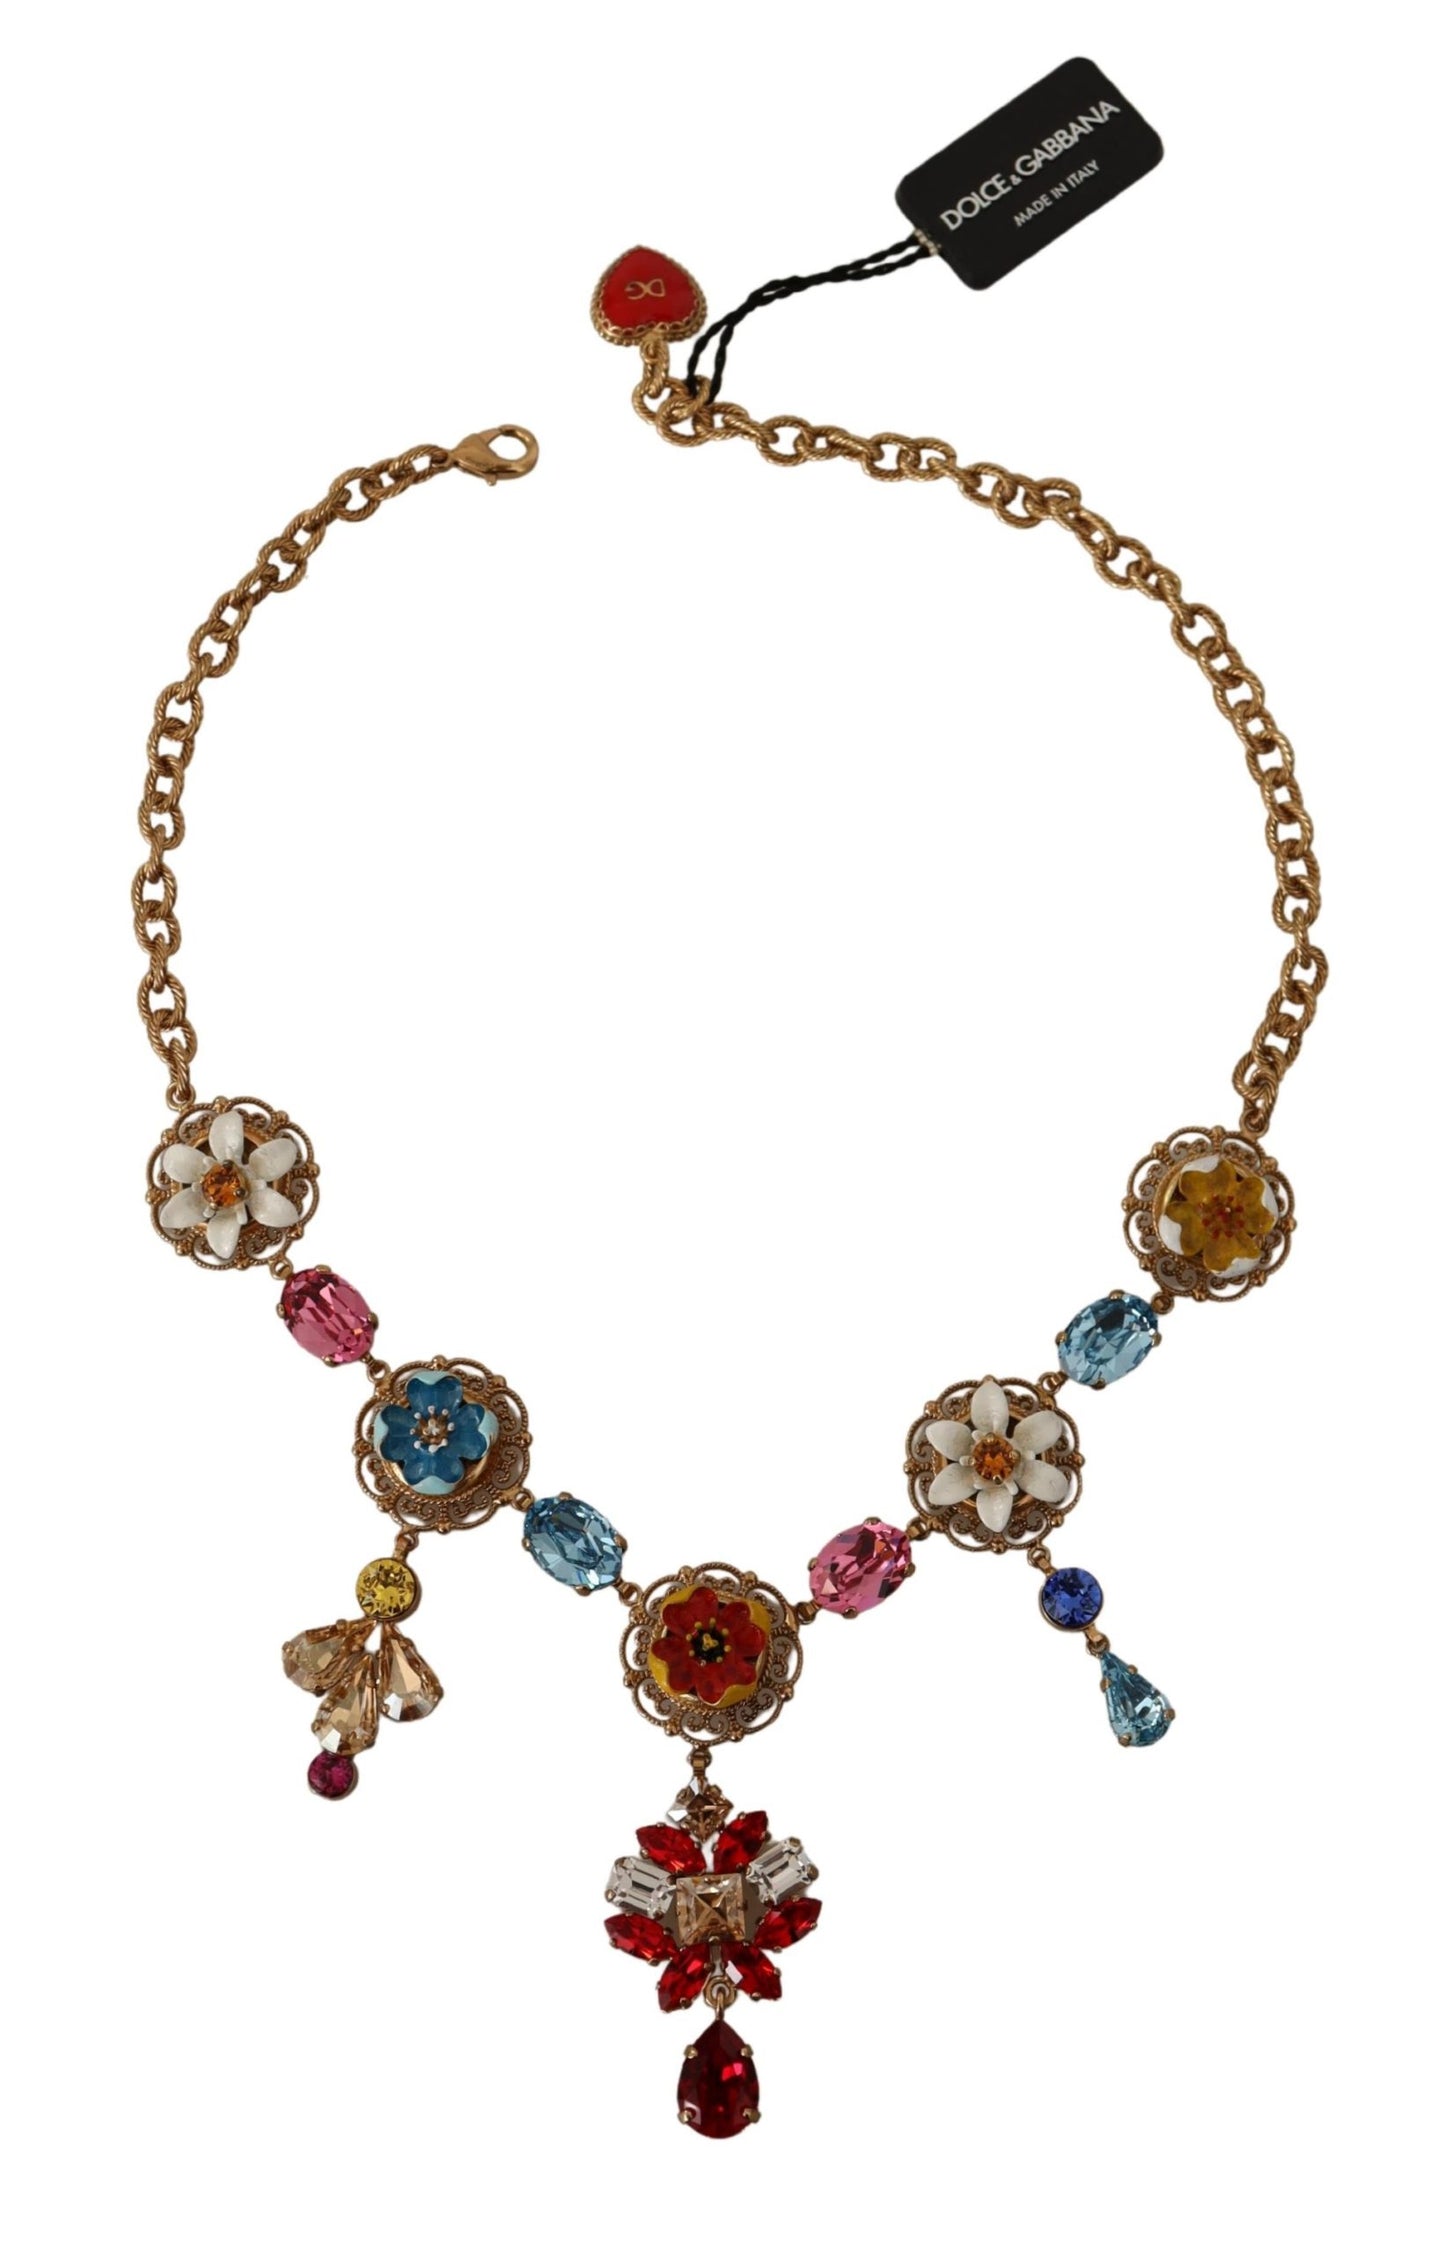 Dolce & Gabbana Gold Brass Floral Sicily Charms Statement Necklace - DEA STILOSA MILANO